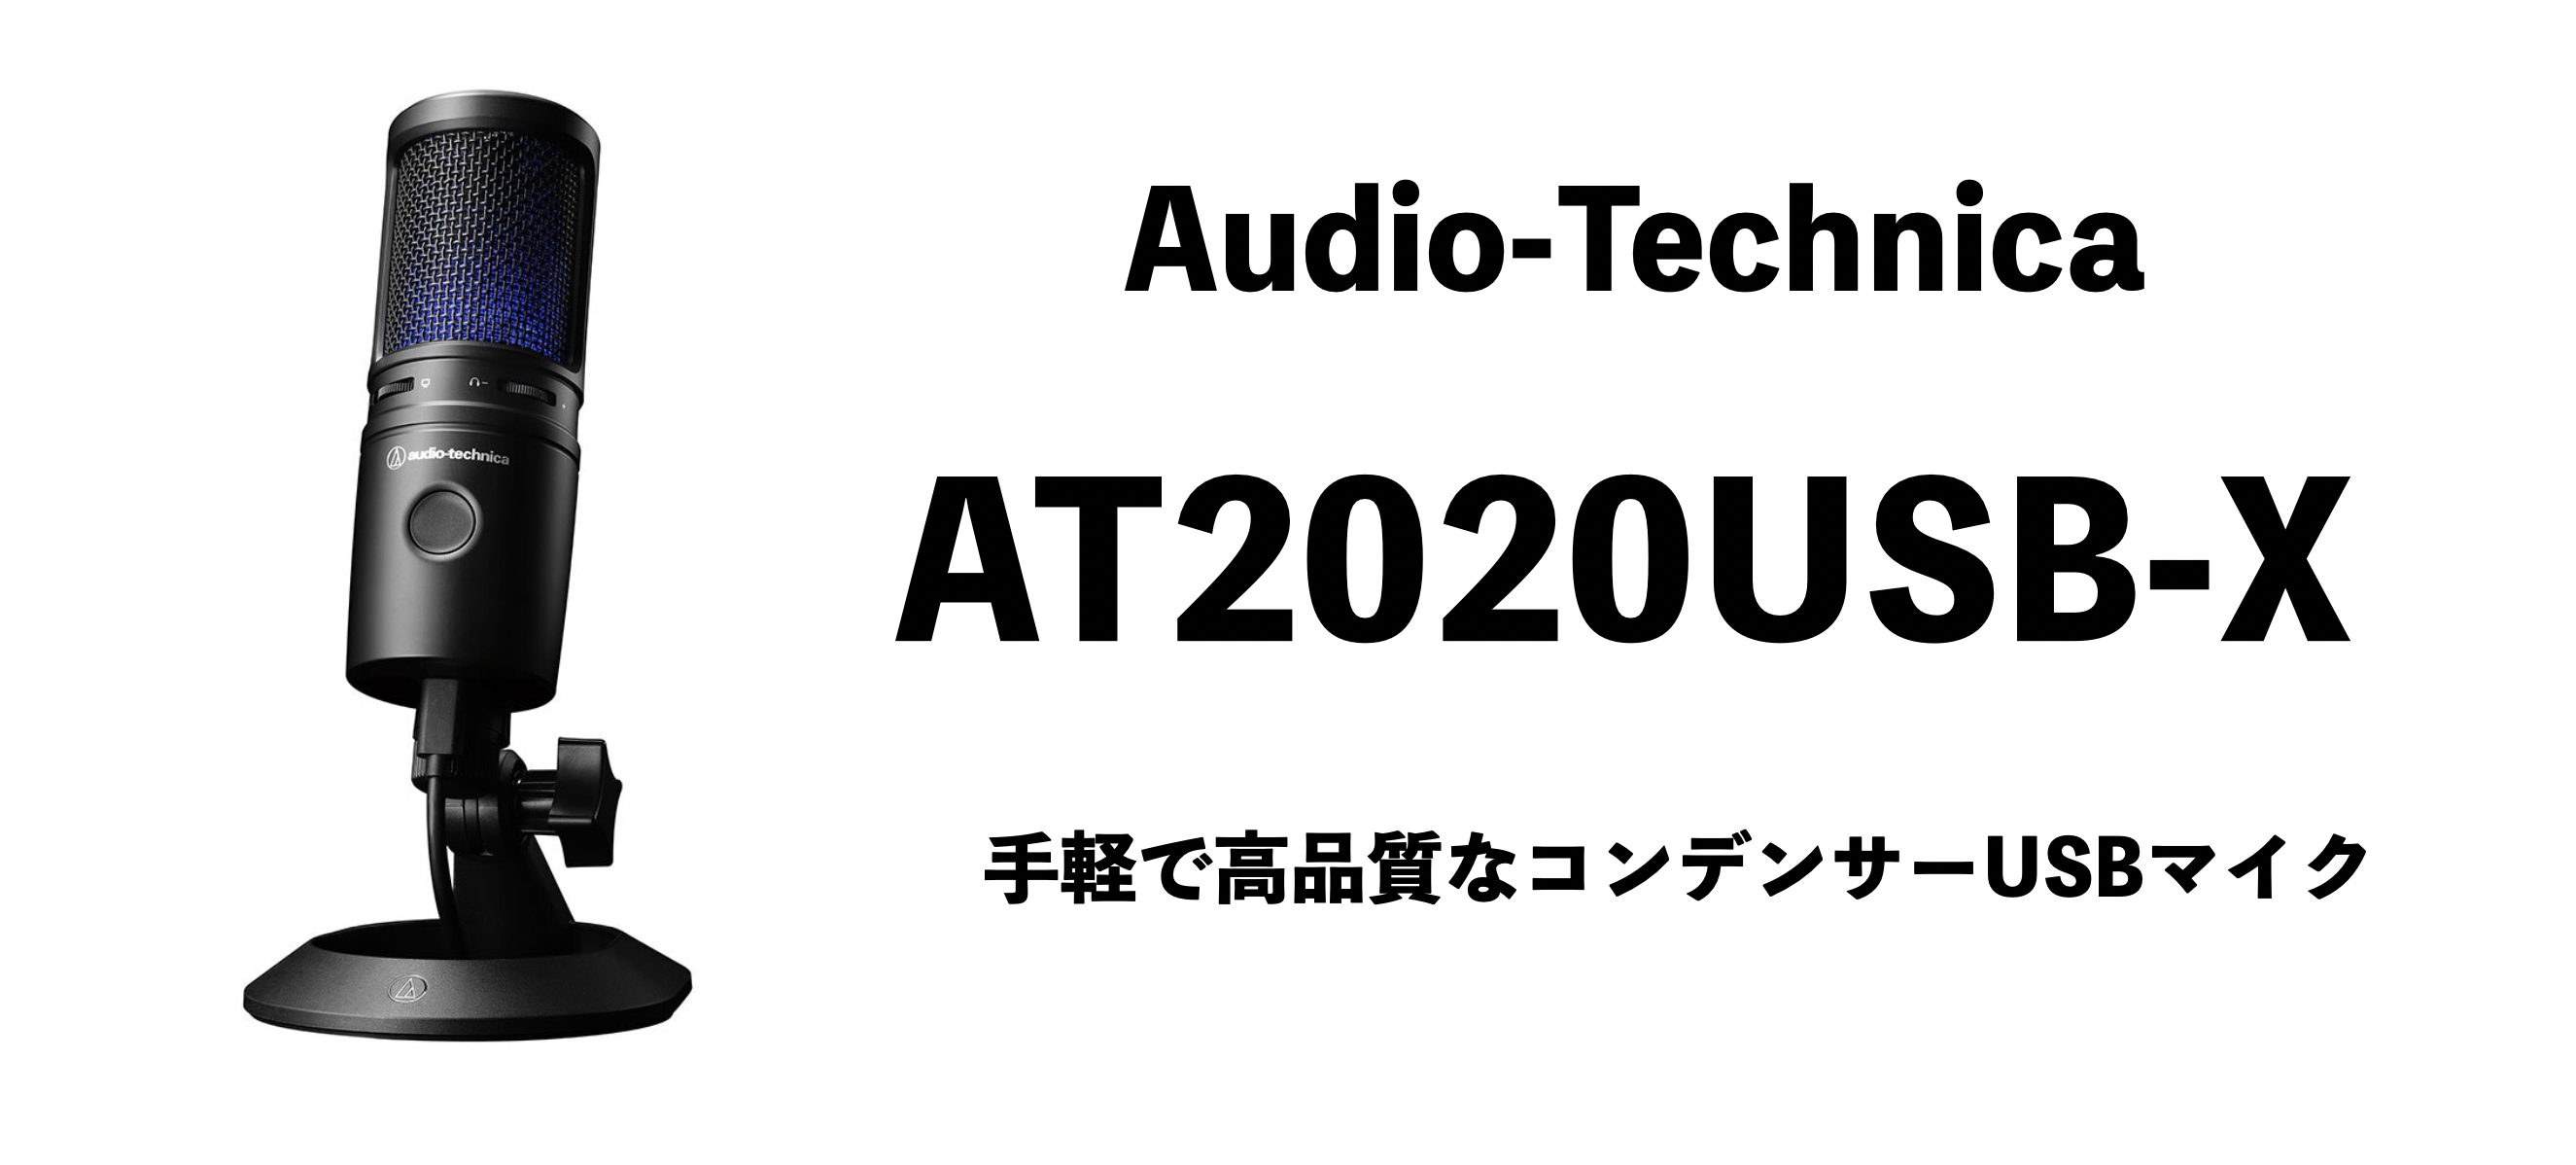 audio-technica AT2020 USB+